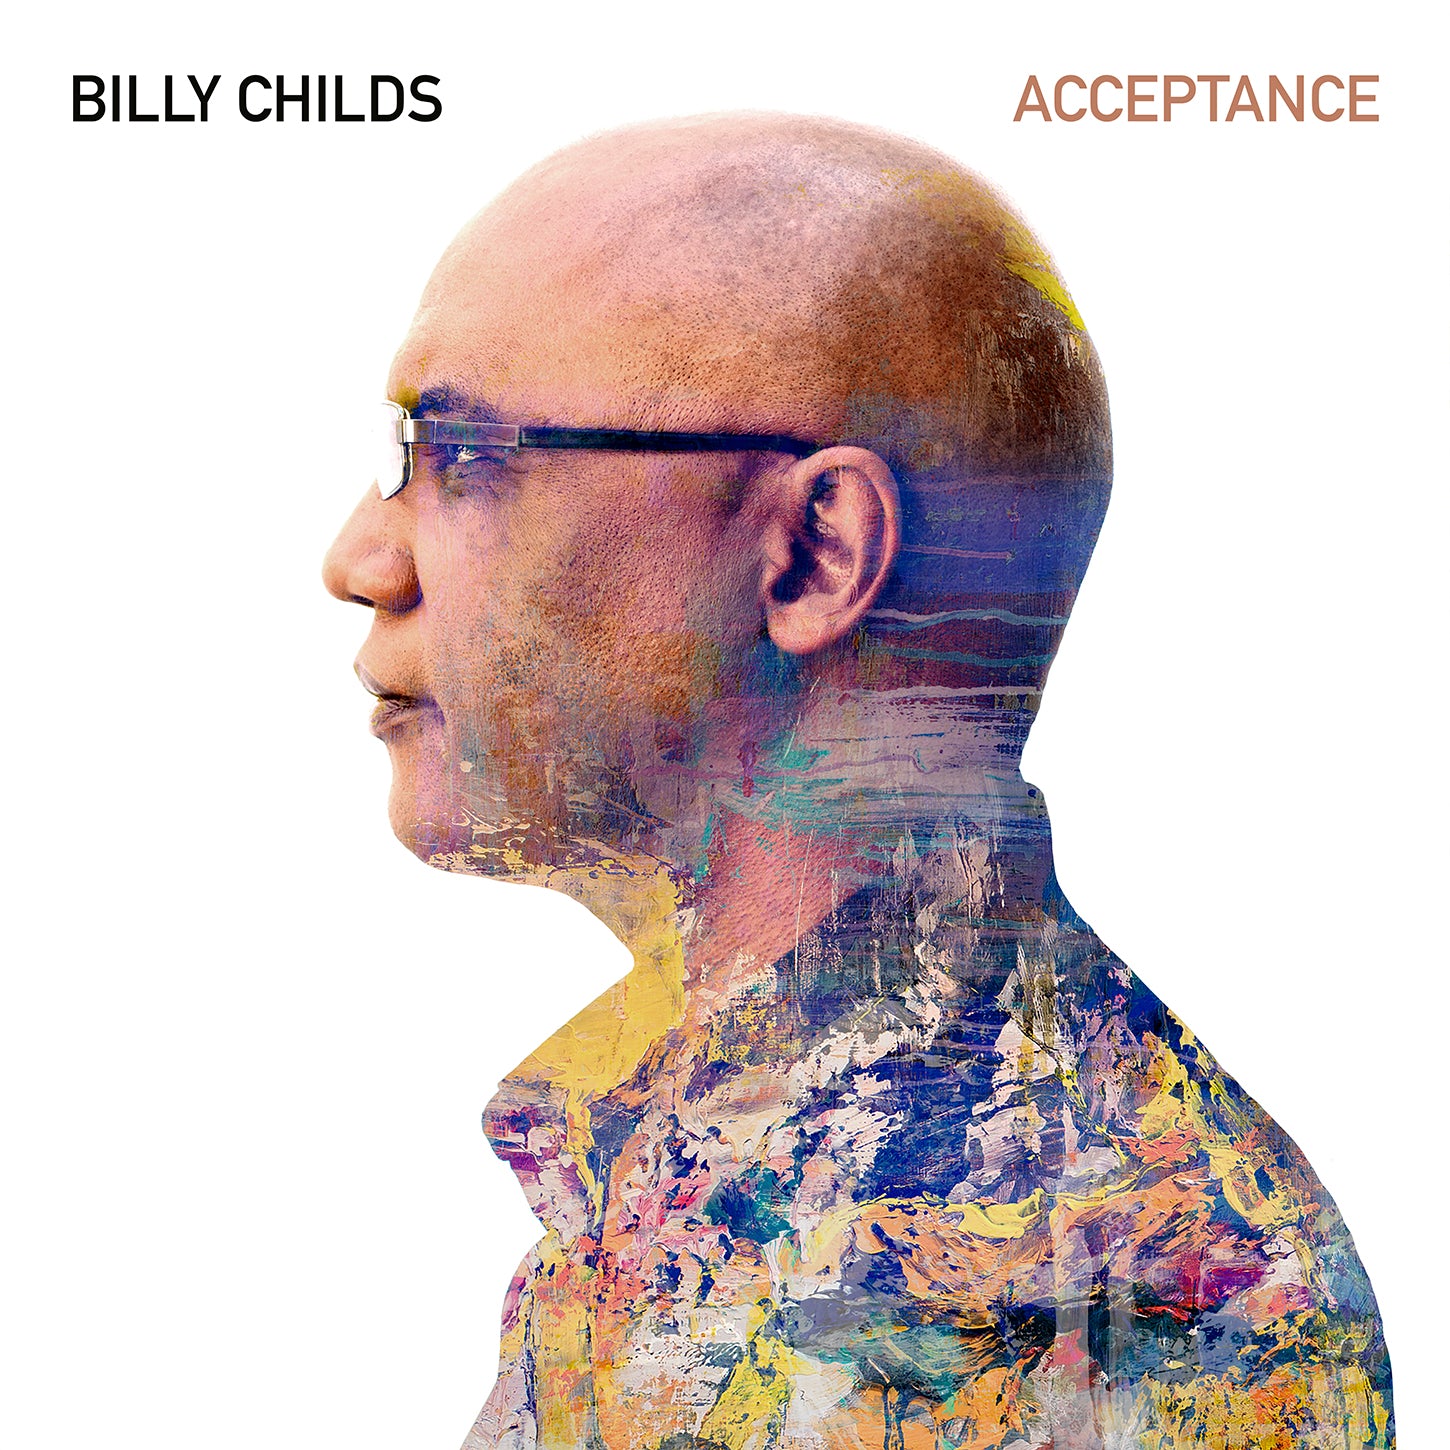 Acceptance / Billy Childs